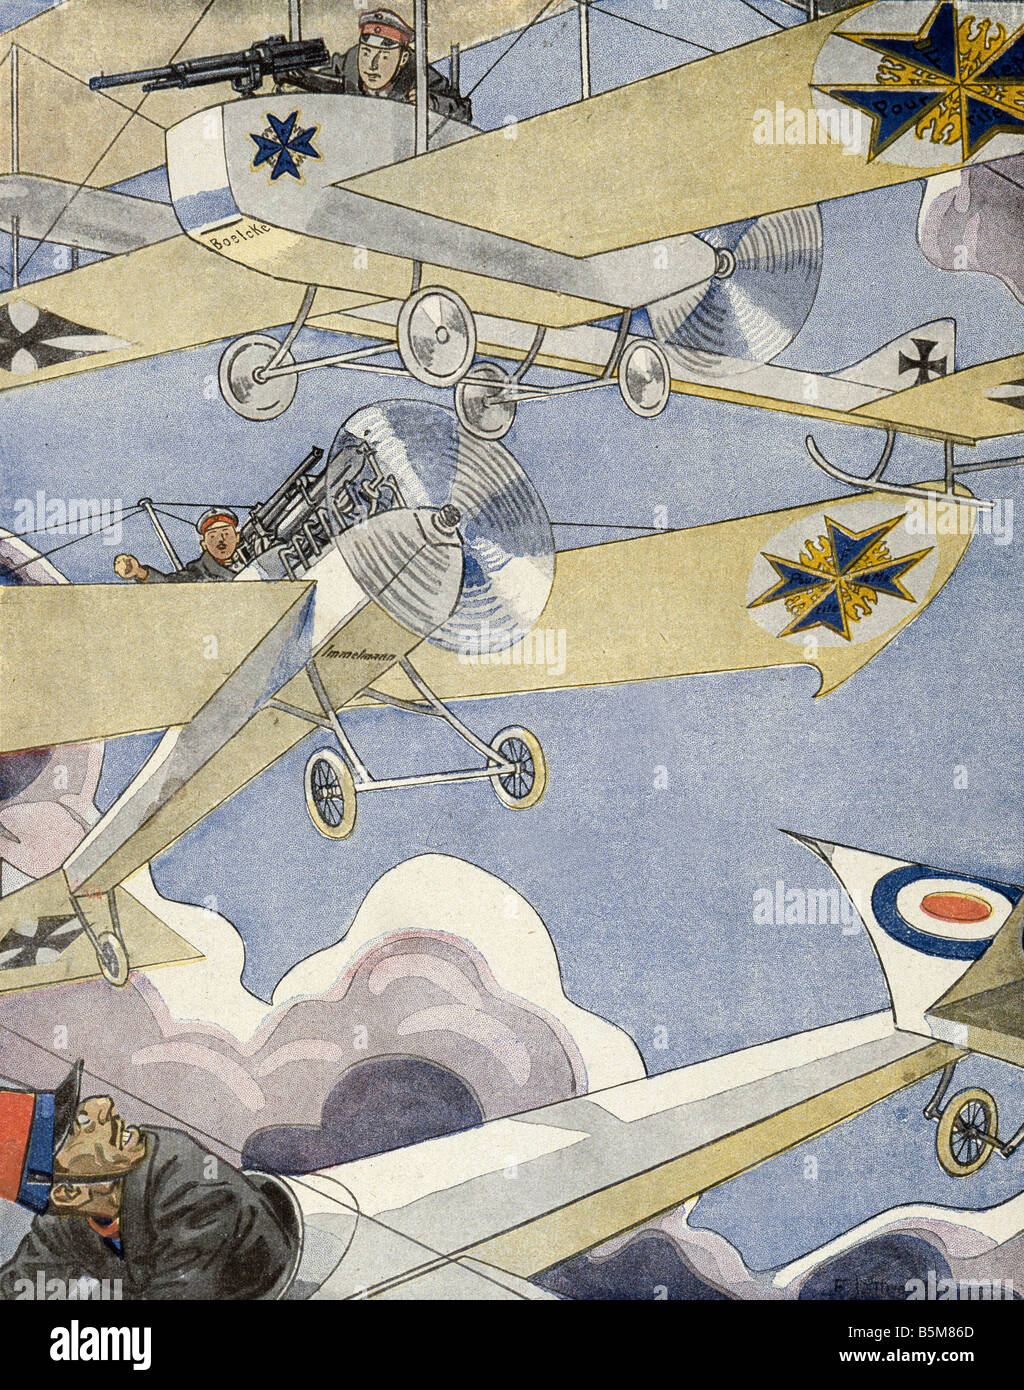 2 G55 B1 1916 2 E Cartoon di piloti I Guerra Mondiale 1916 Storia la Prima Guerra Mondiale la guerra aerea Boelcke e Immelmann flying knights Foto Stock